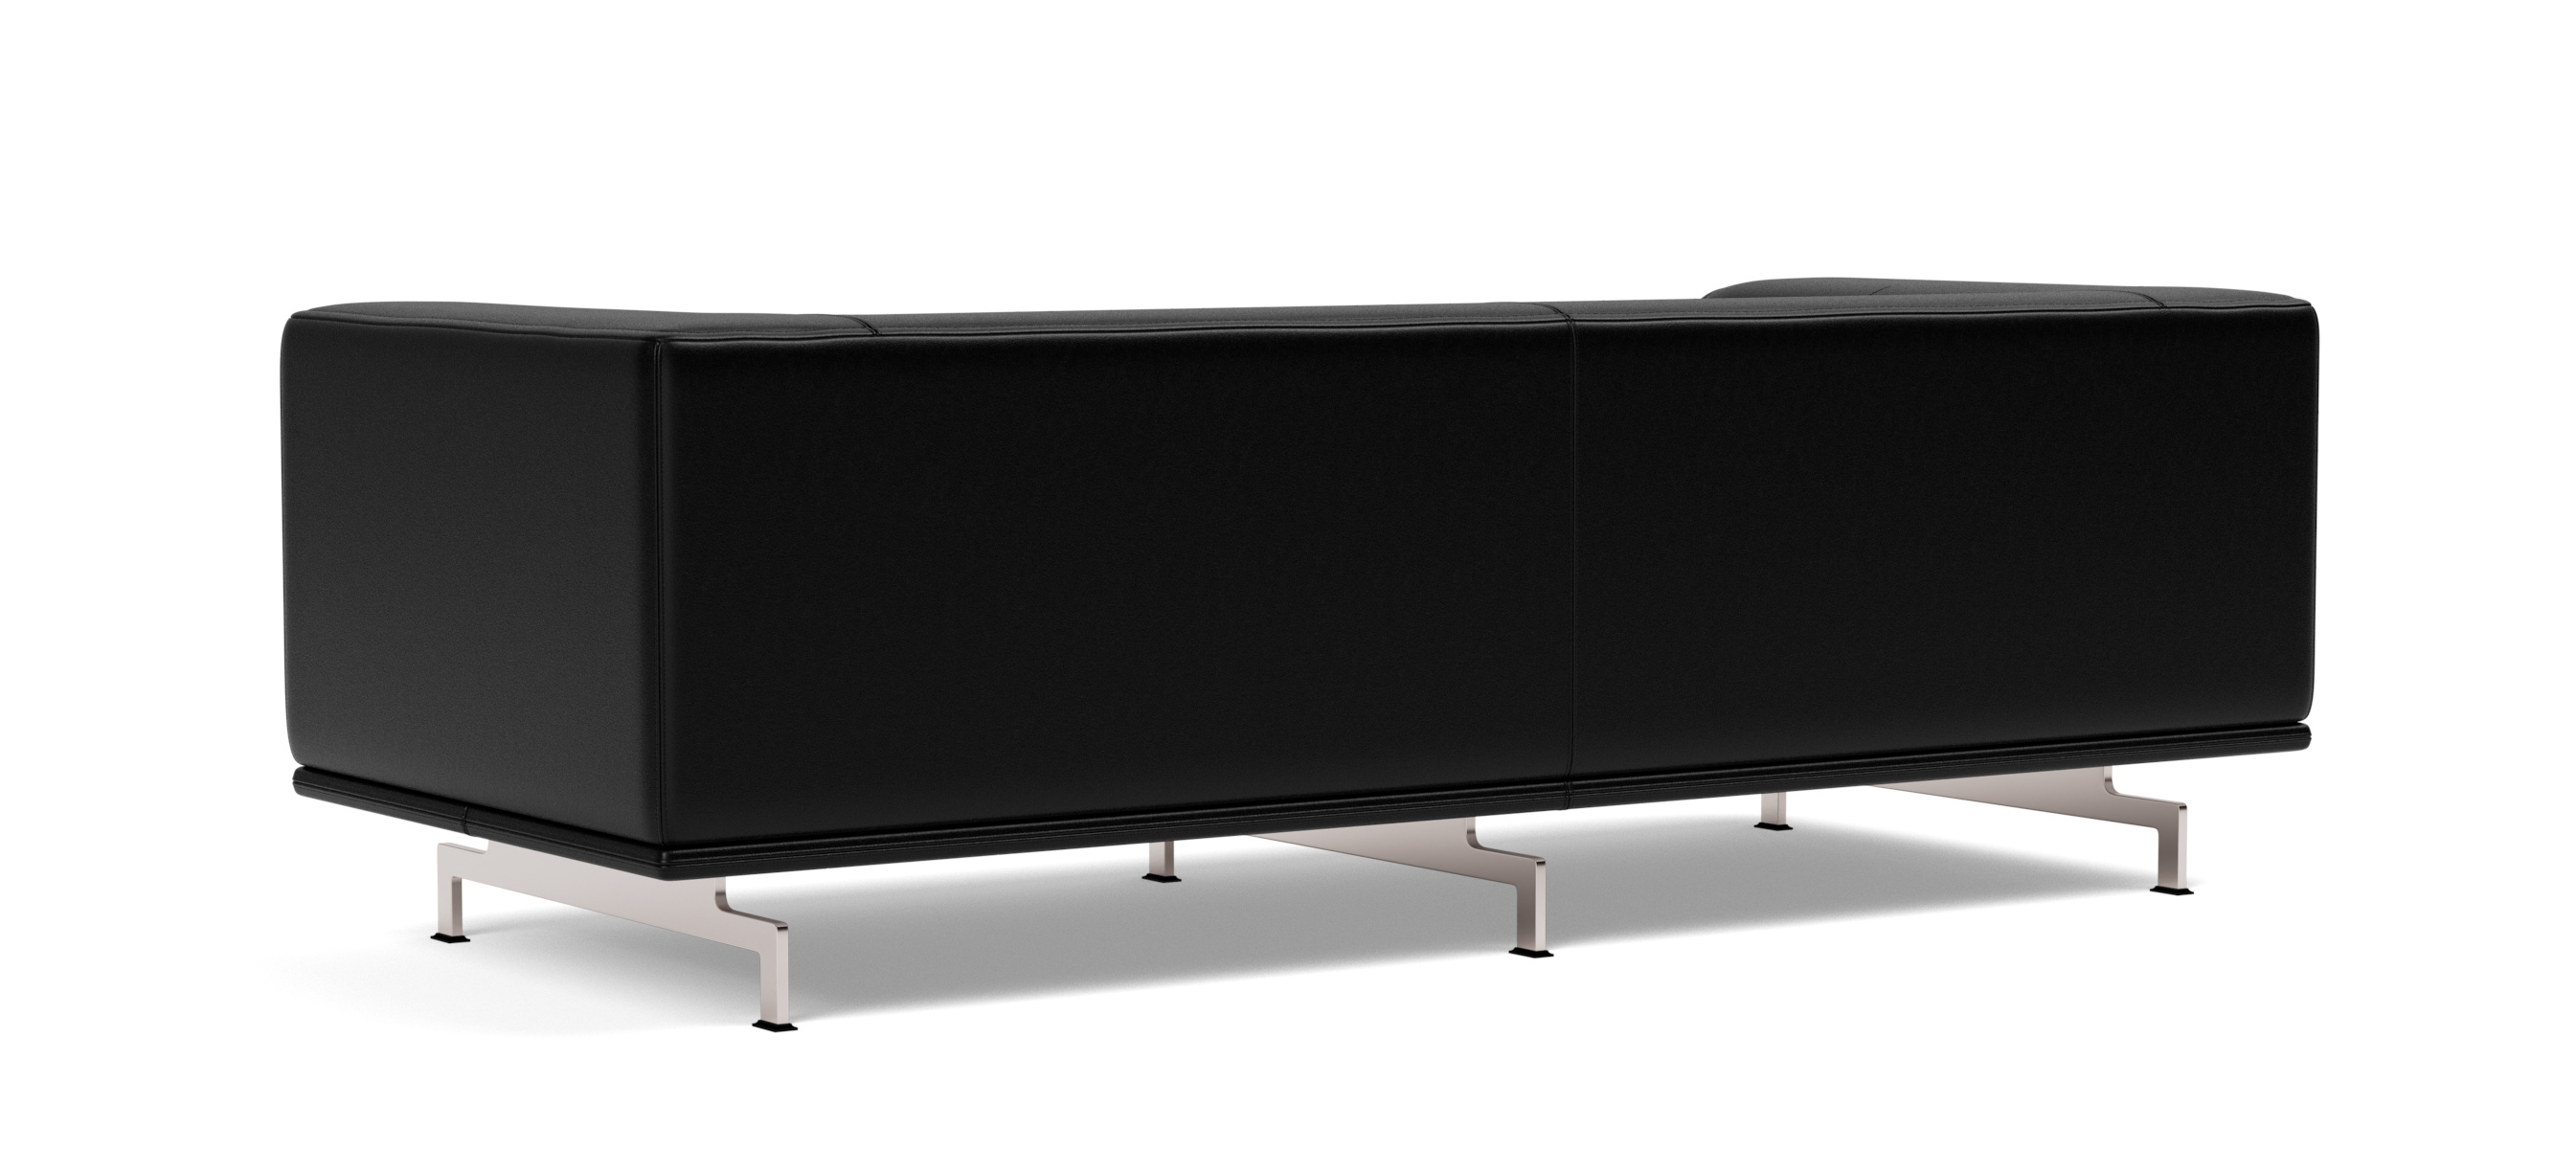 Delphi Sofa - Model 4510, brushed aluminium / leder cera 905 russet brown